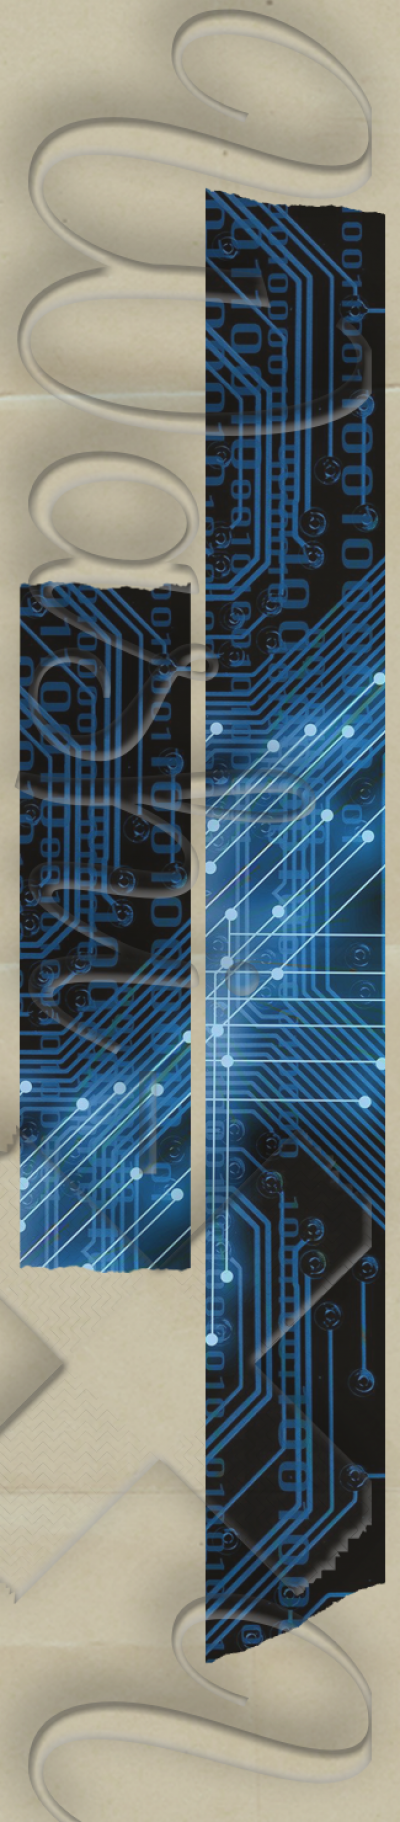 Washi-X Washi Tape Printed circuit board patterned washi tape